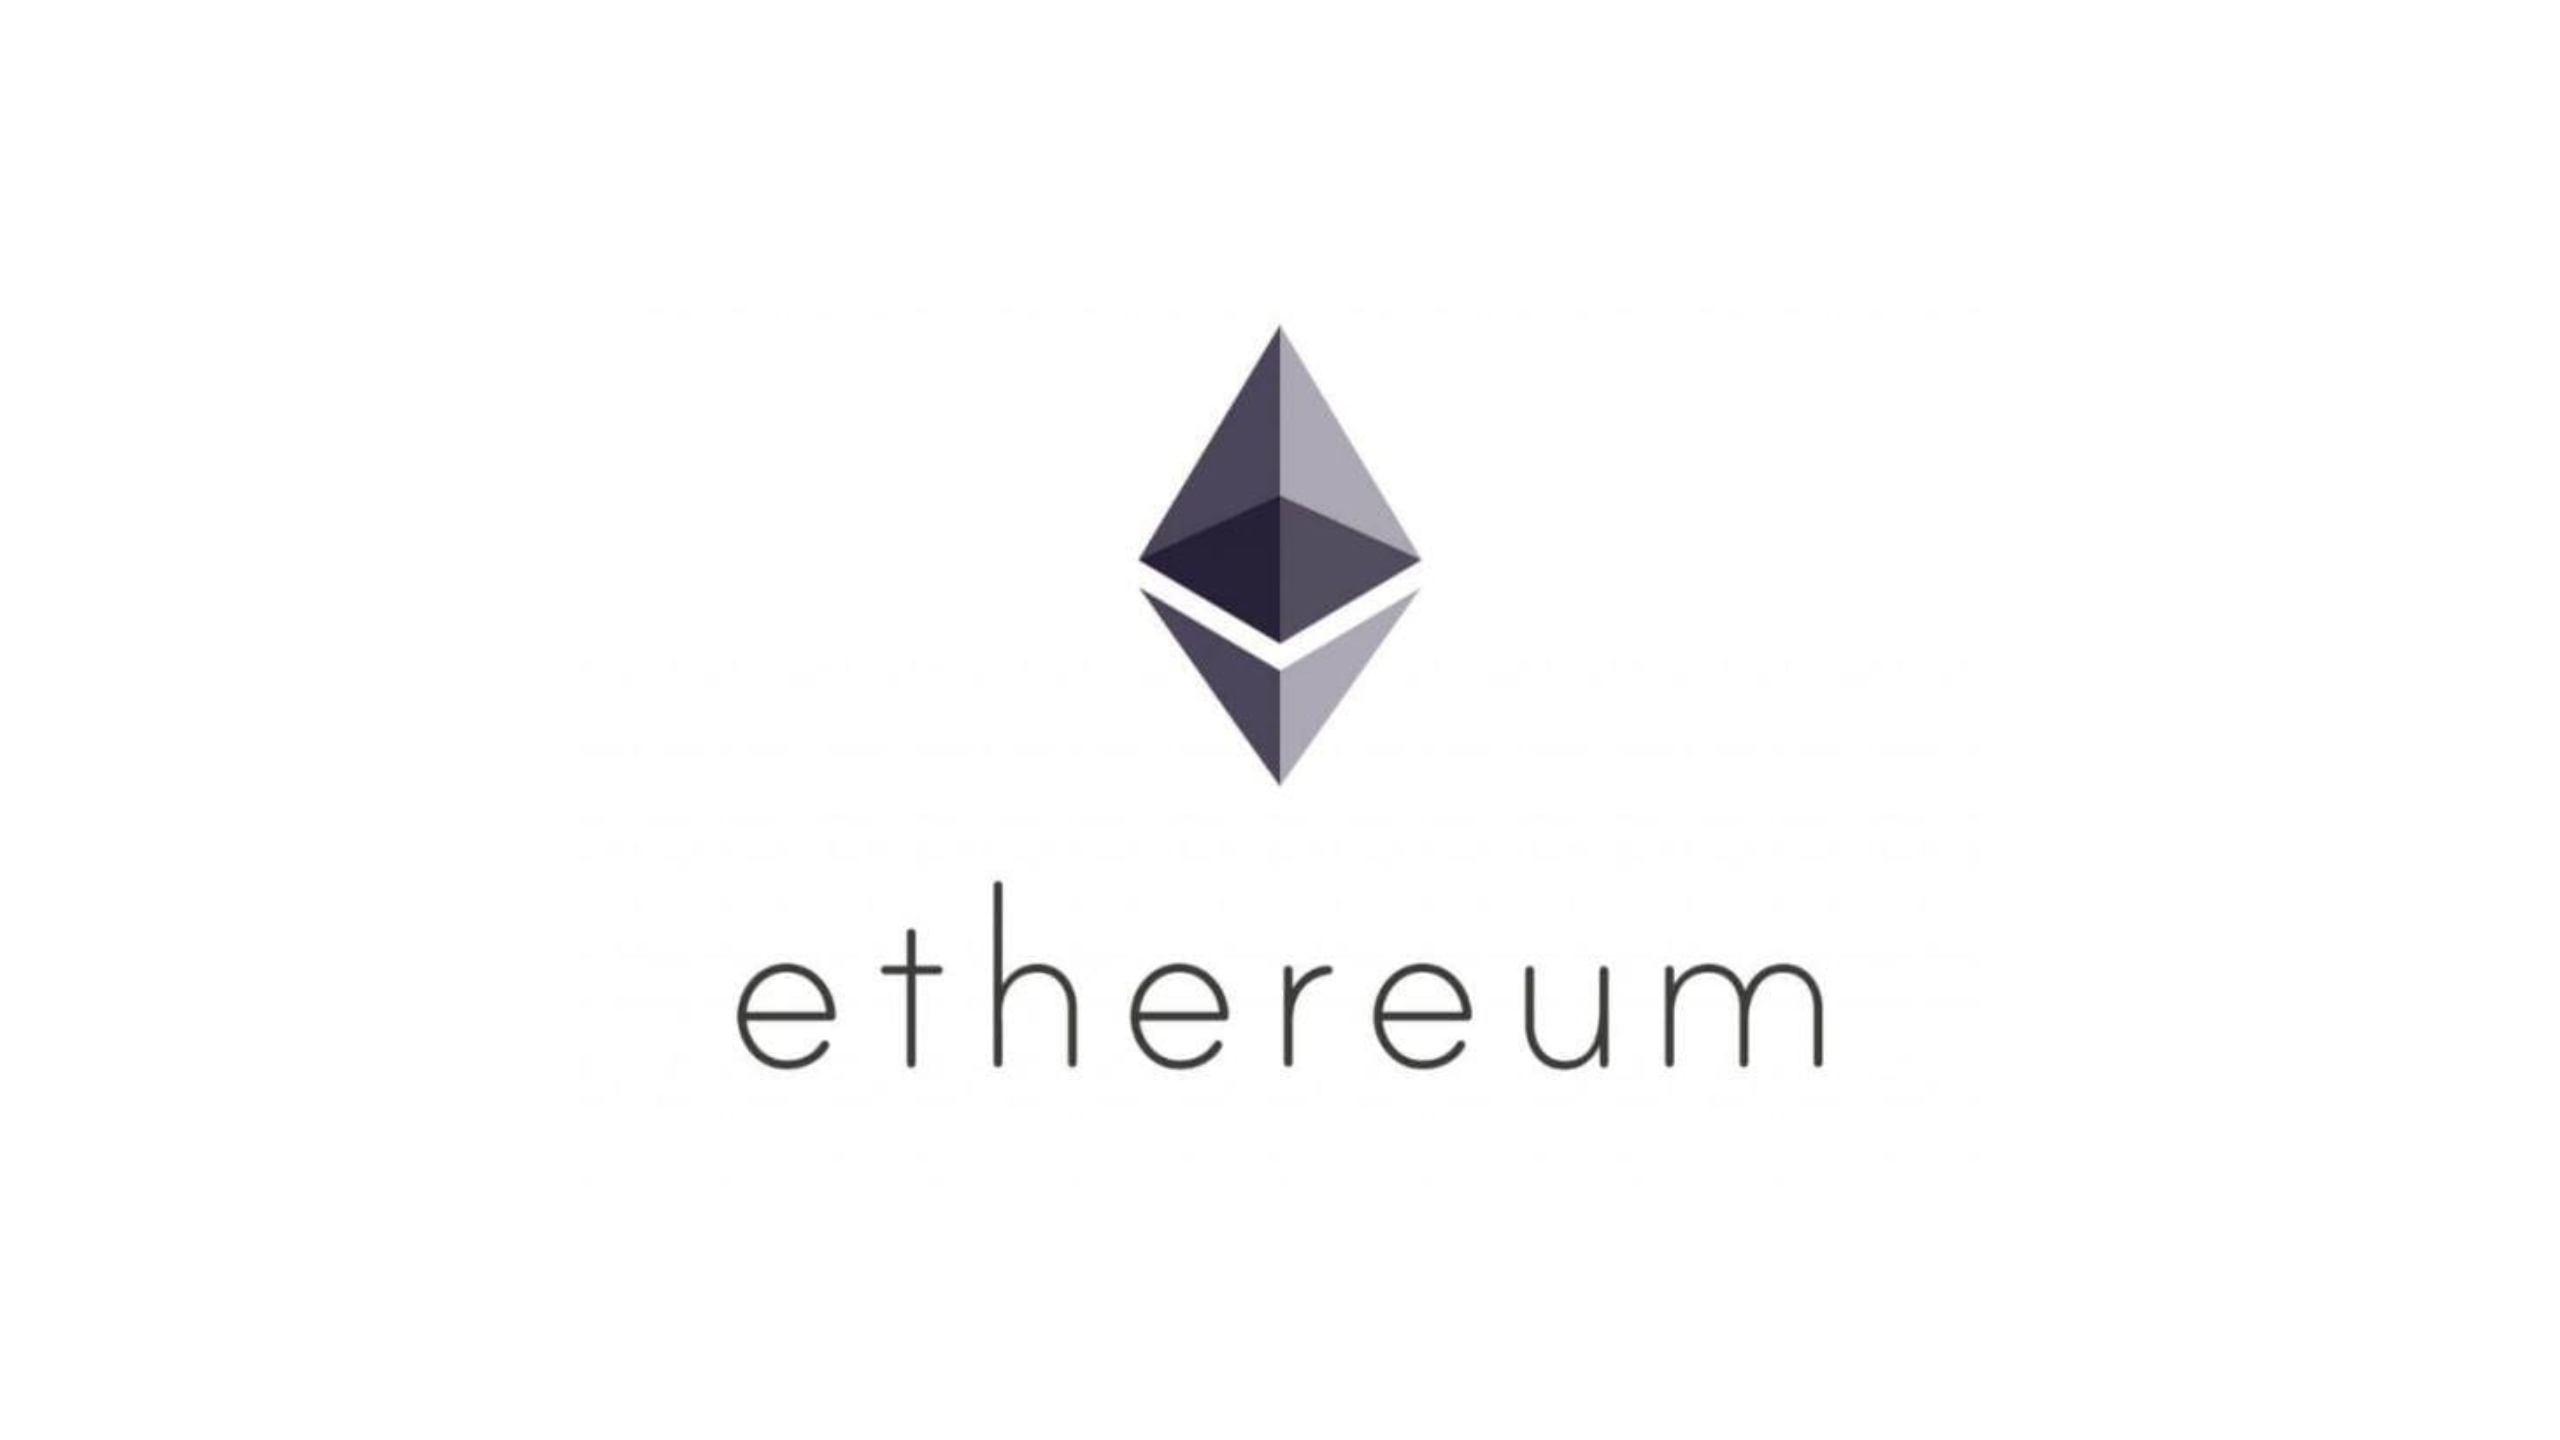 ethereum logo on white